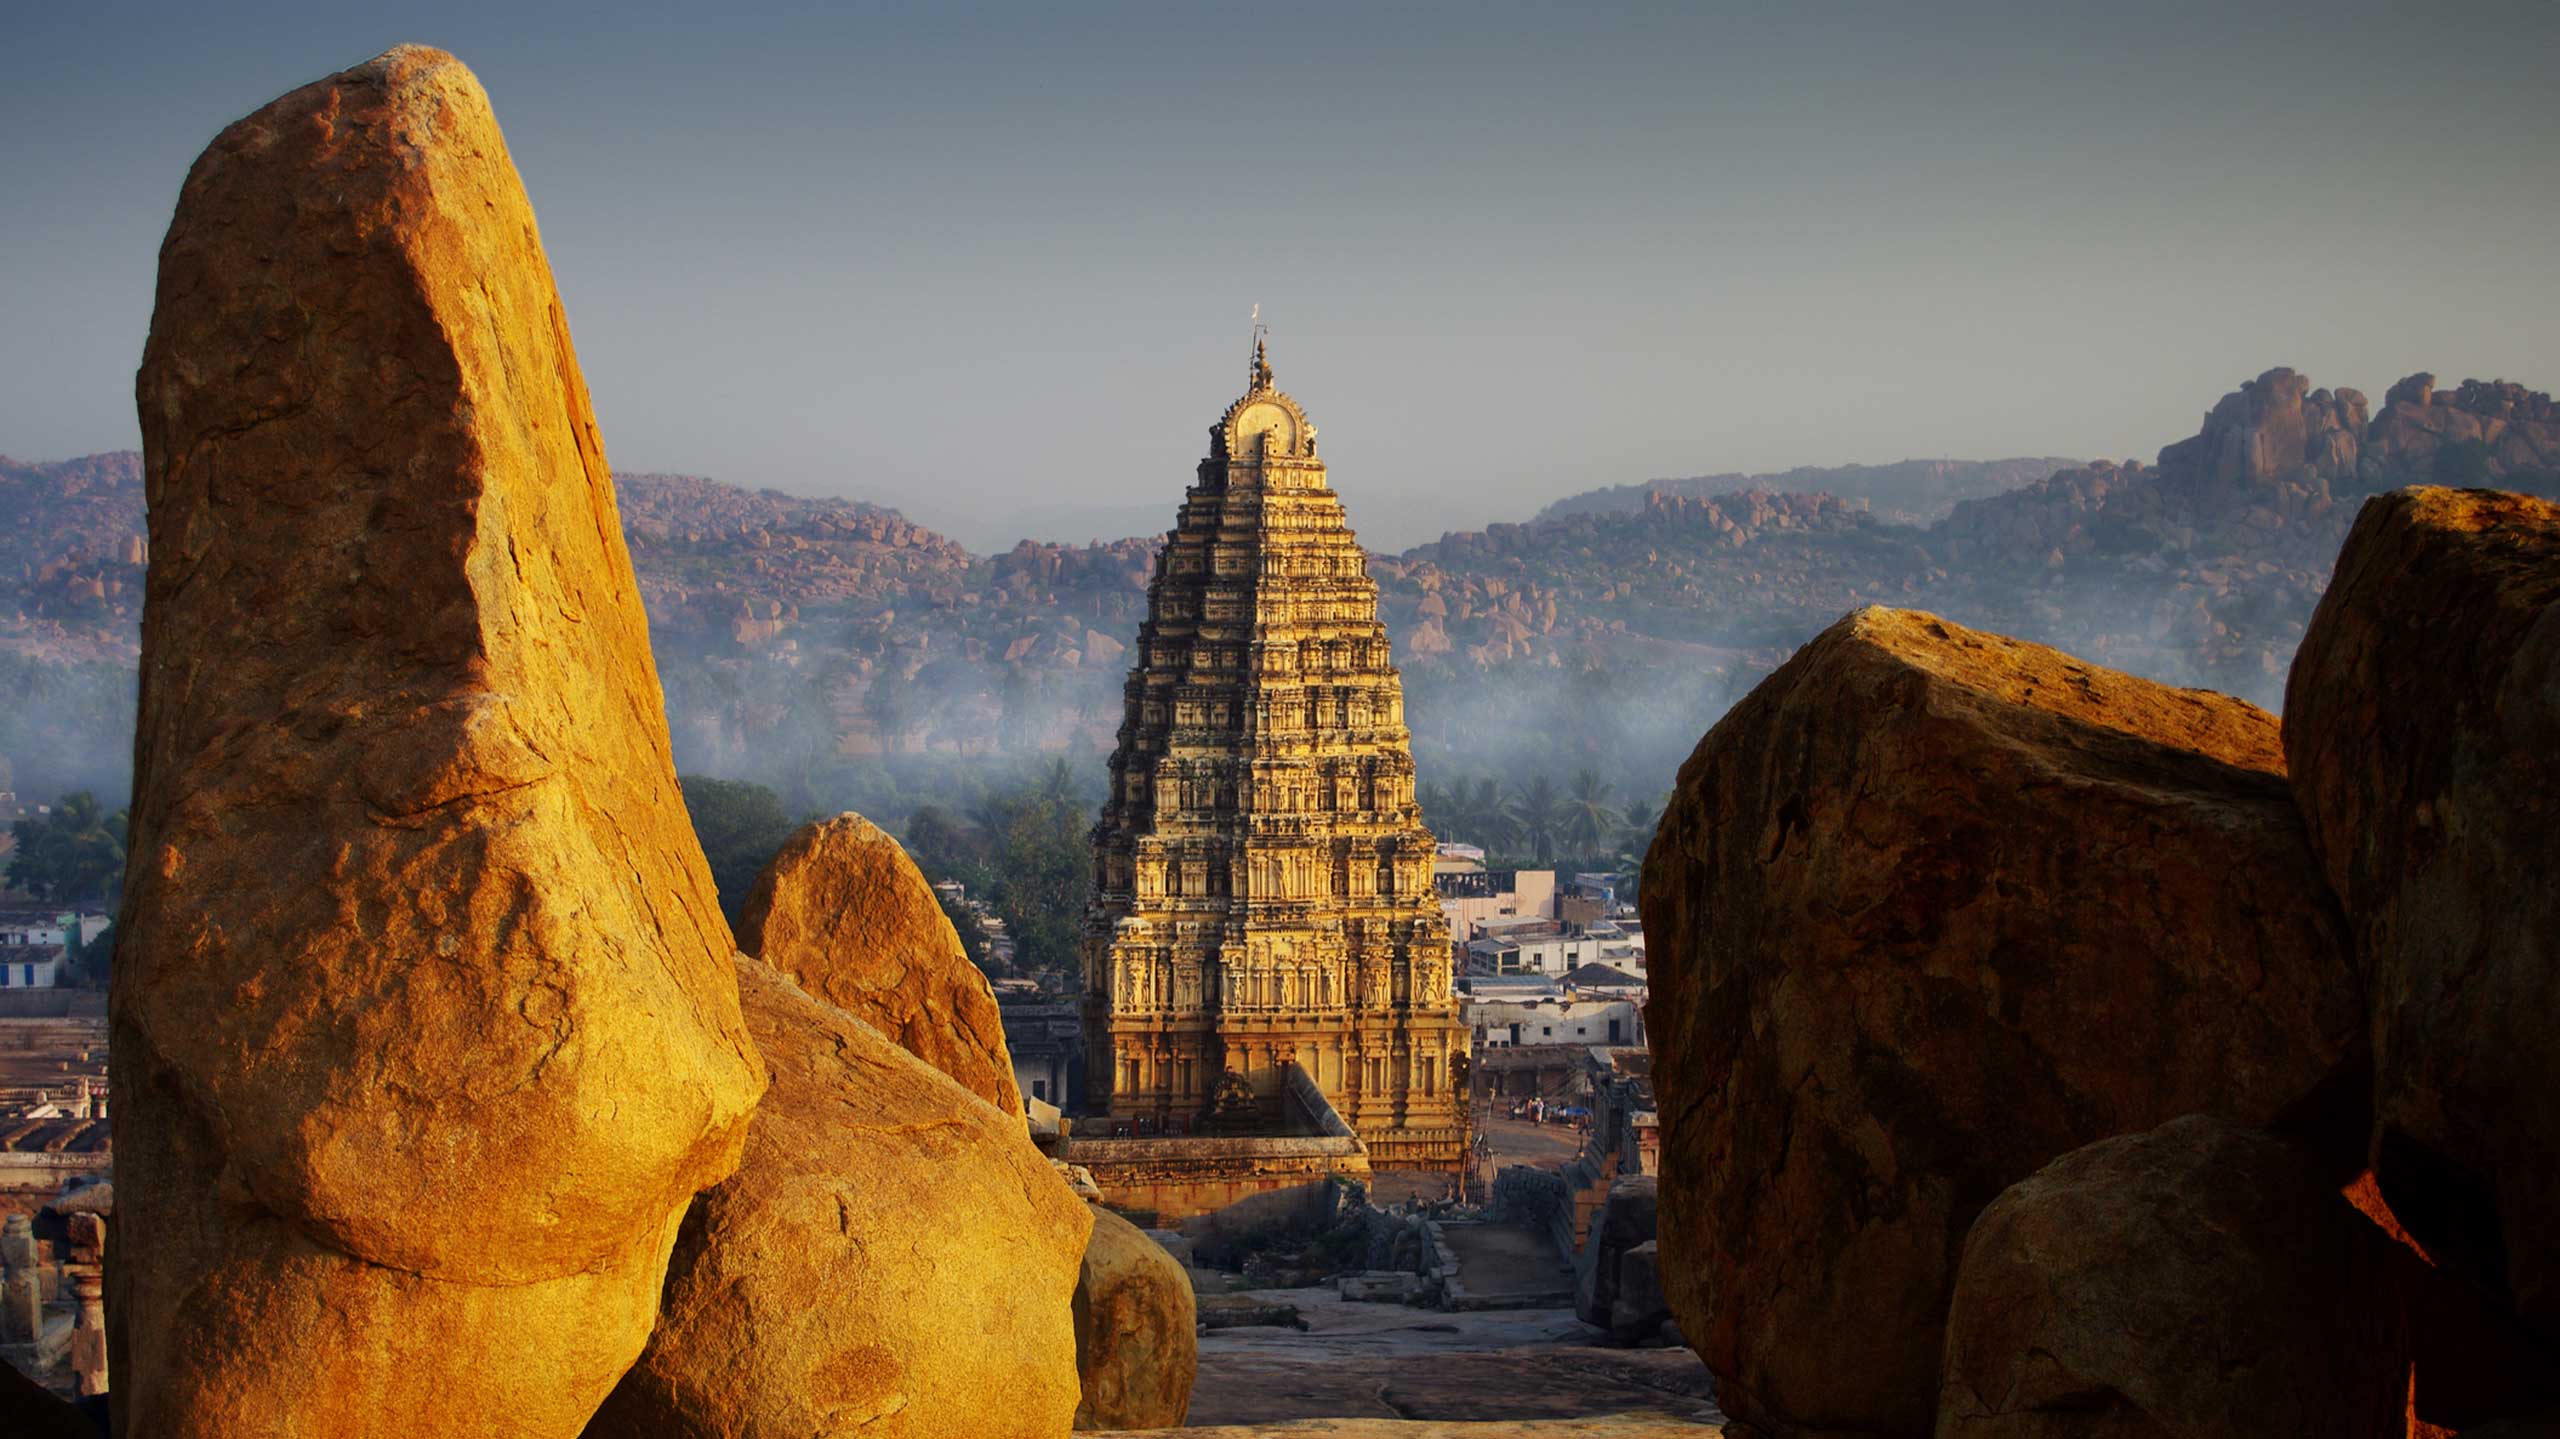 Temple ruins at Hampi in India